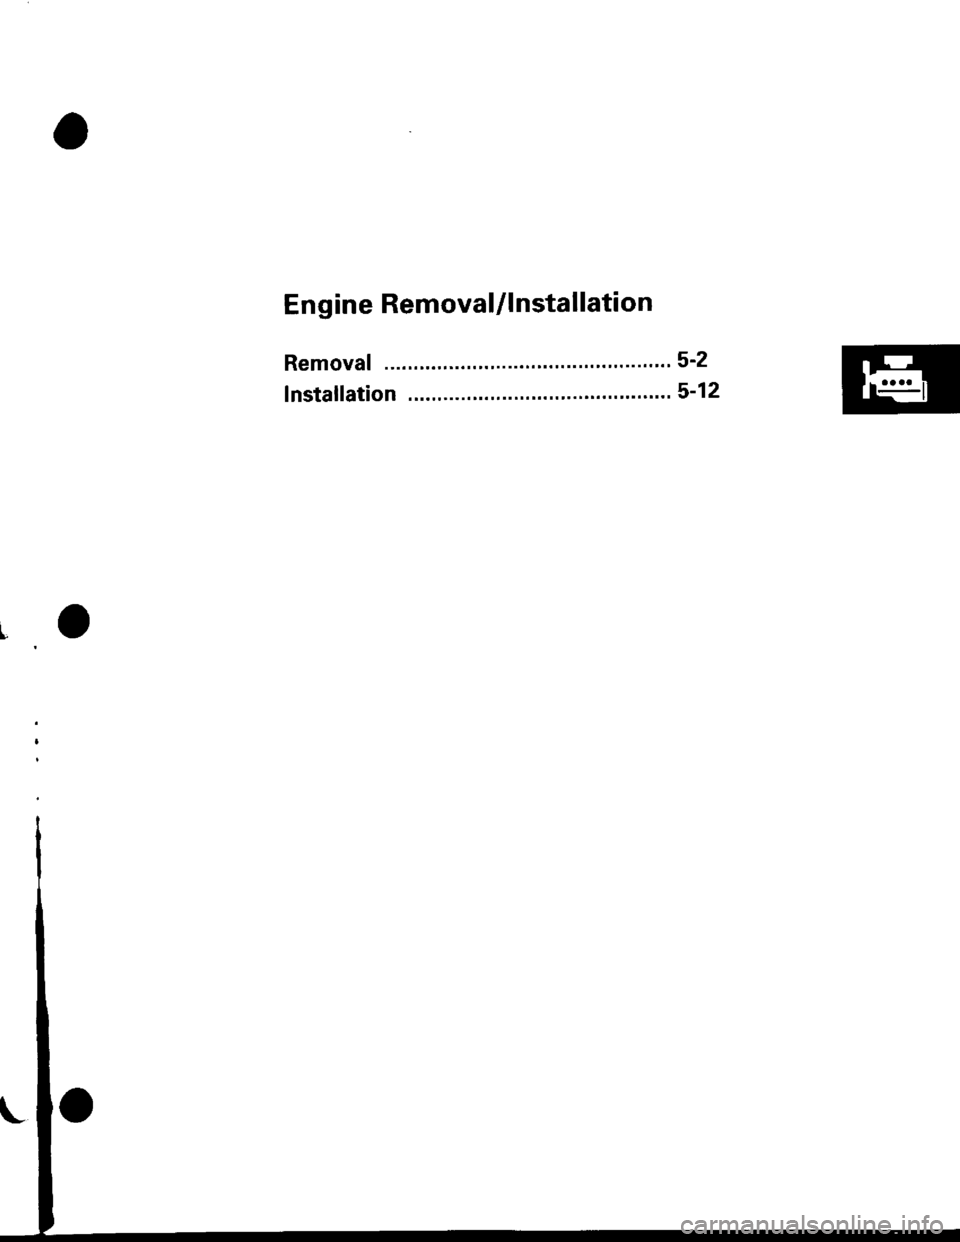 HONDA CIVIC 1997 6.G Owners Manual En g ine Removal/l nstallation
Removal "...52
lnstaf lation . 5-12lgr" 